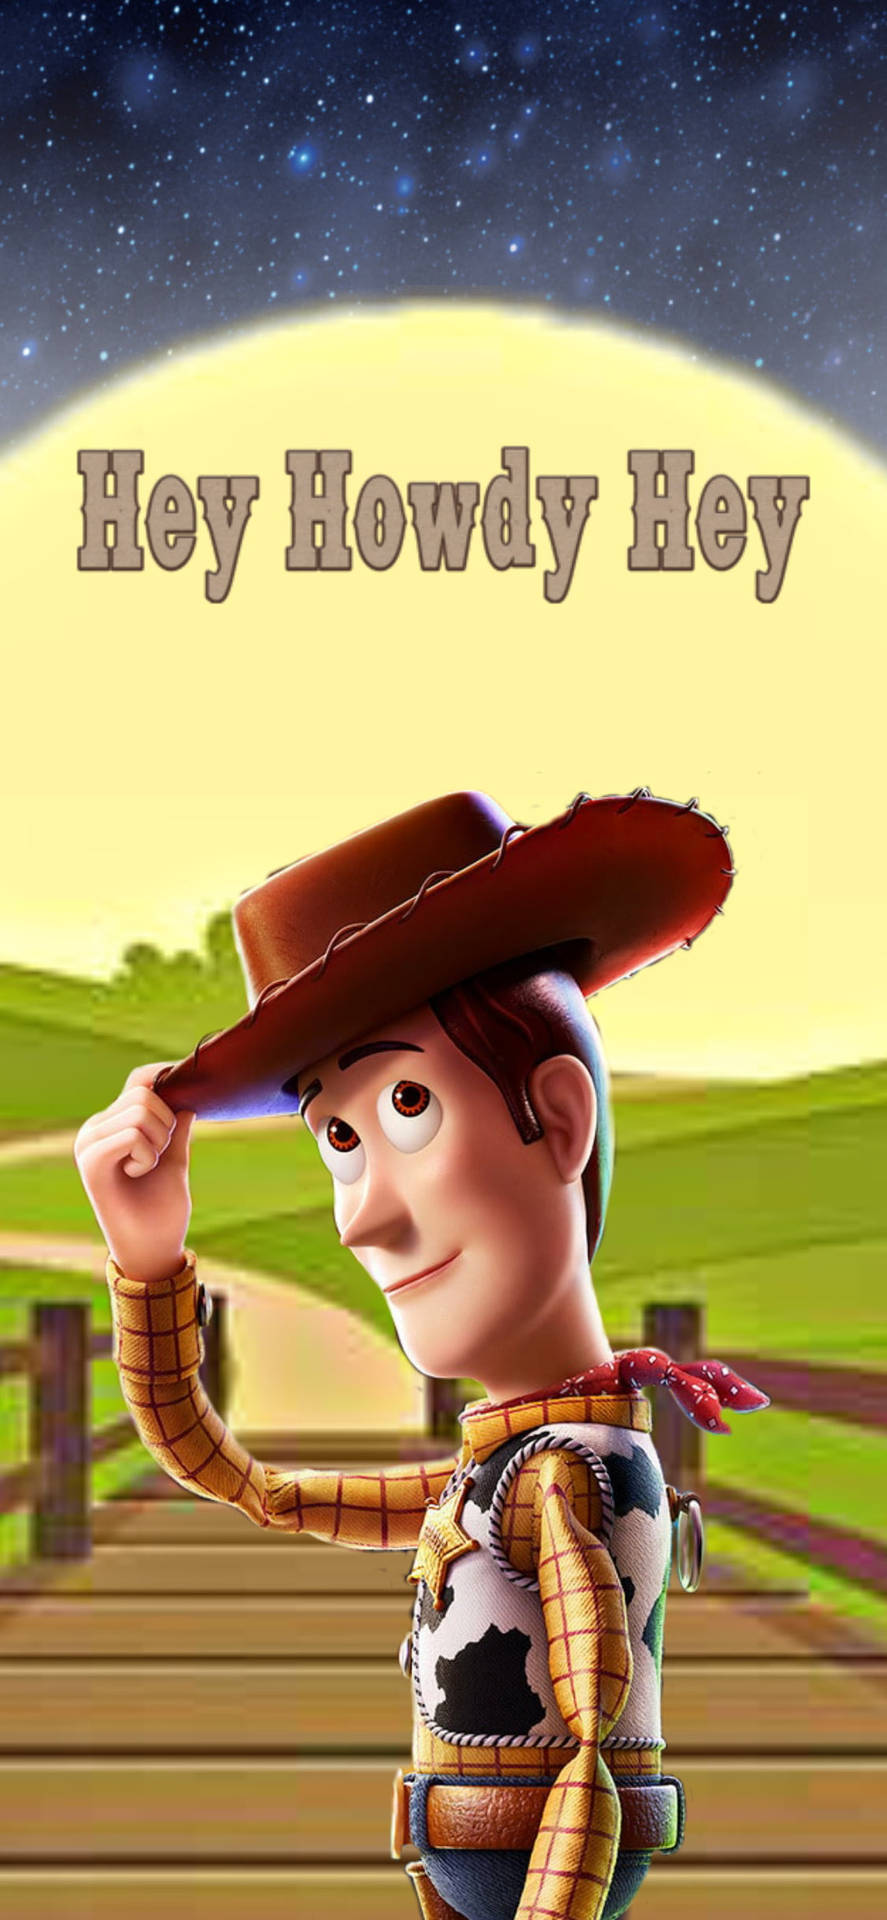 Få Toy Story 3 Sheriff Woody motivation på dit skrivebord! Wallpaper